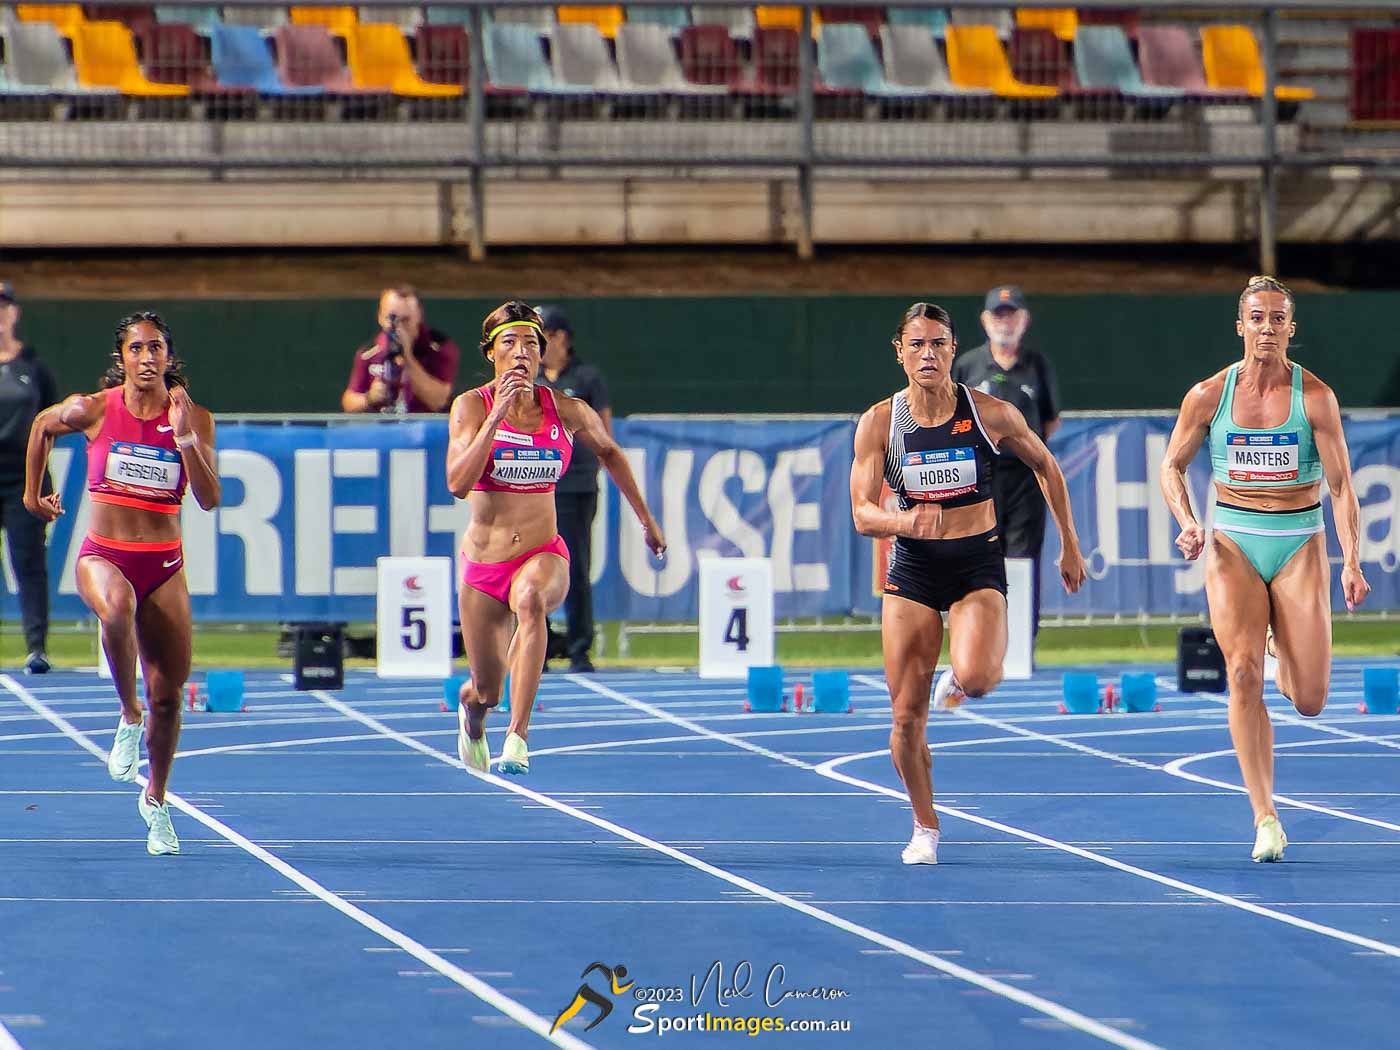 Veronica Shanti Pereira, Arisa Kimishima, Zoe Hobbs, Bree Masters, Women's 100m A Race